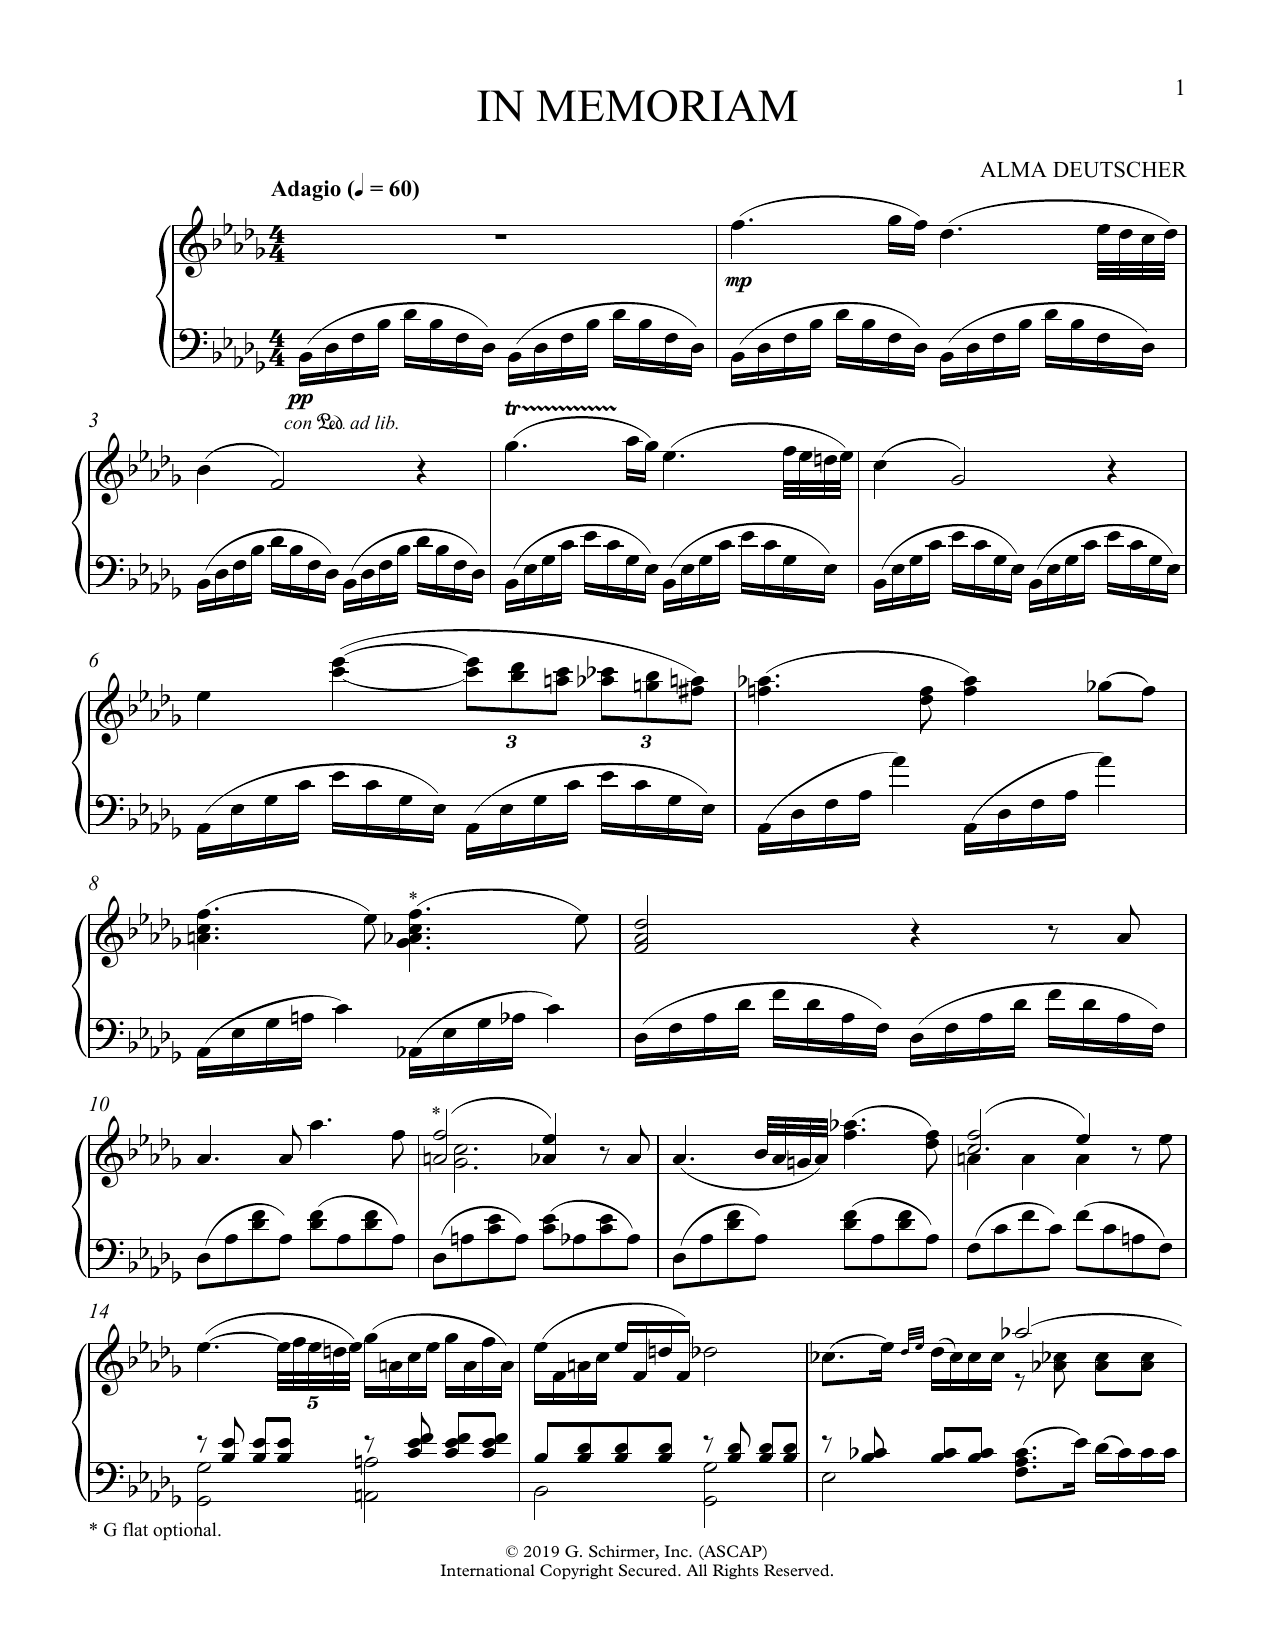 Download Alma Deutscher In Memoriam (Adagio from Piano Concerto Sheet Music